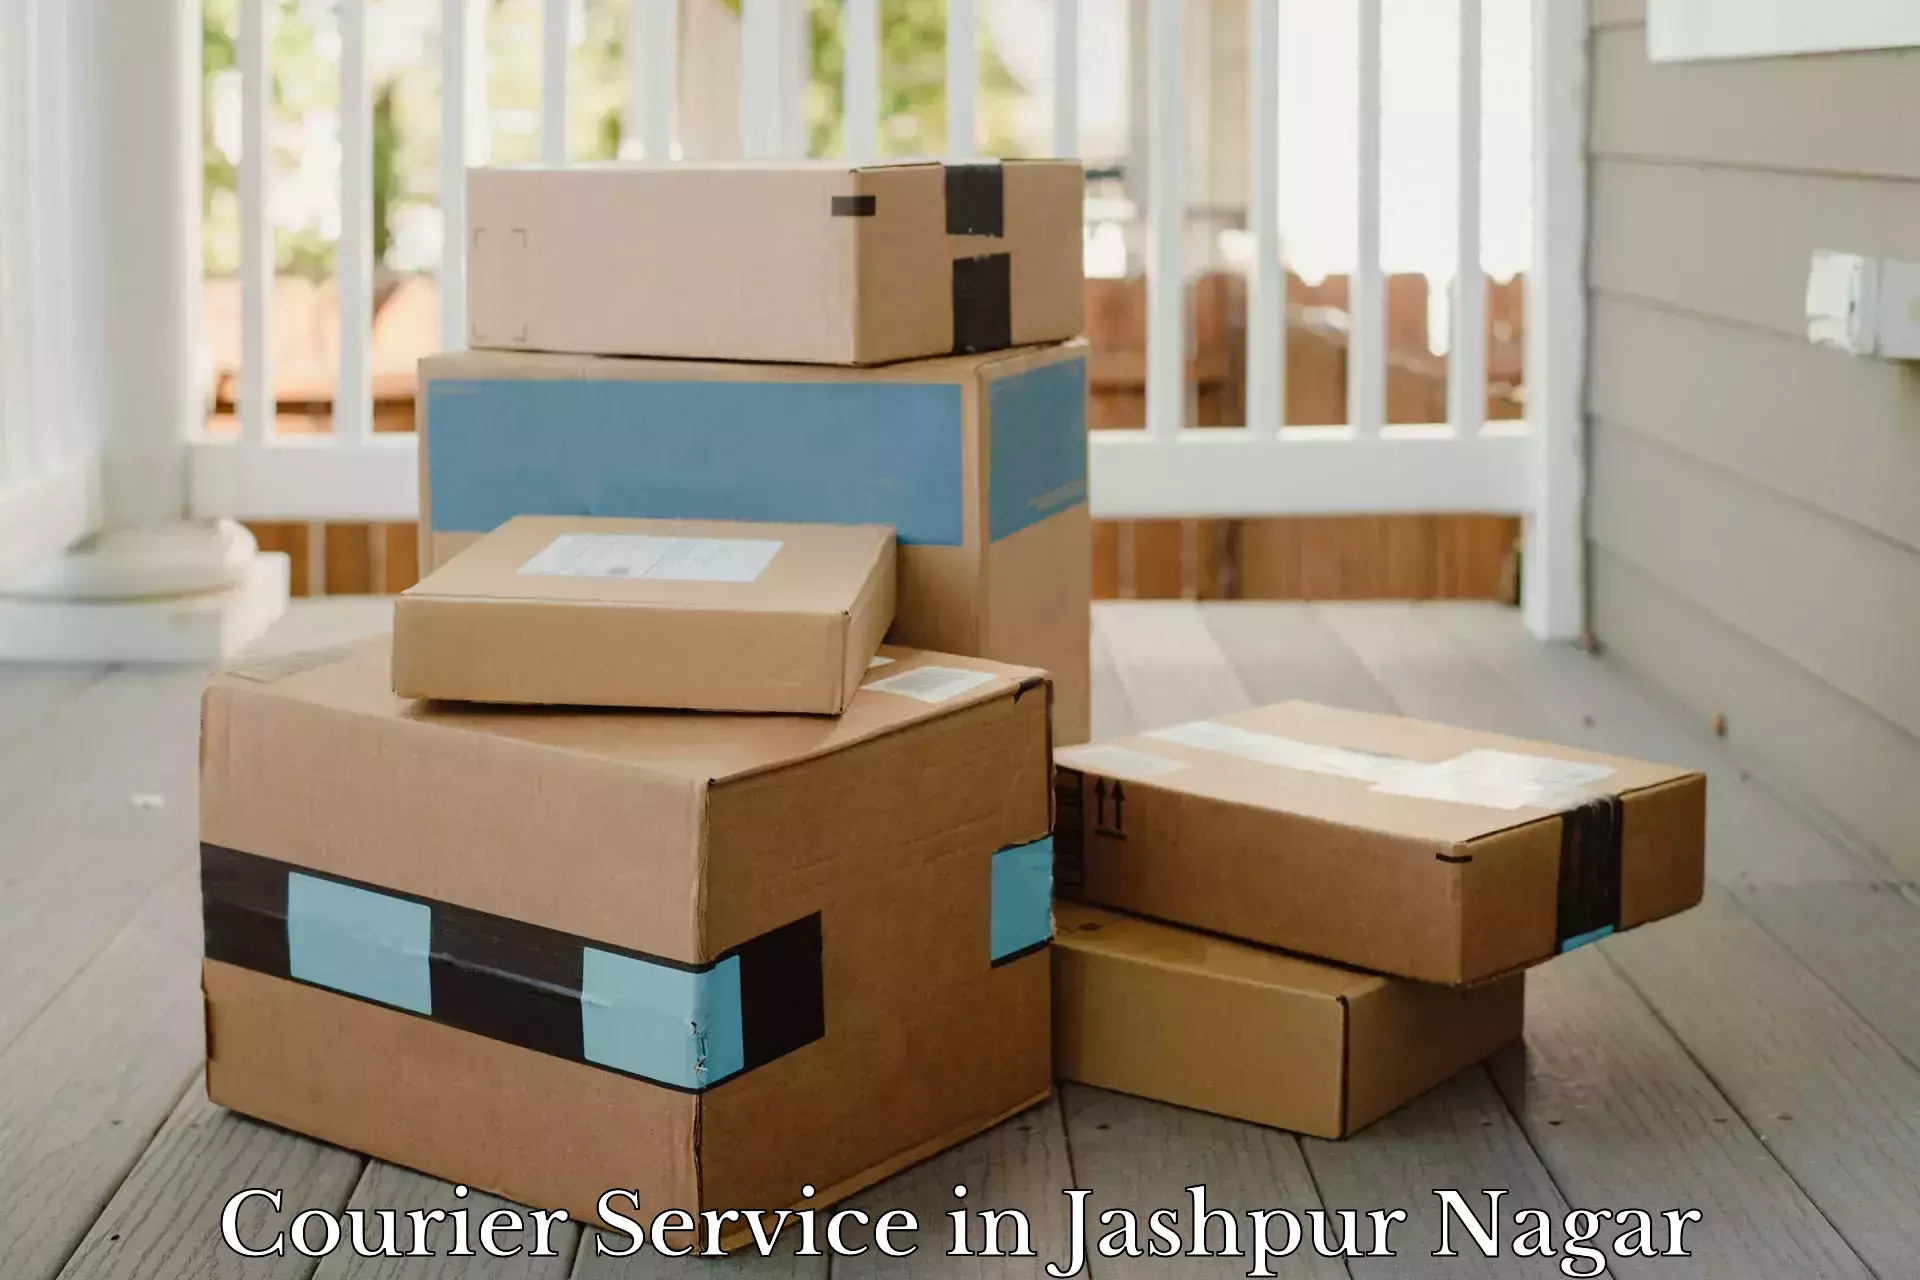 High-performance logistics in Jashpur Nagar